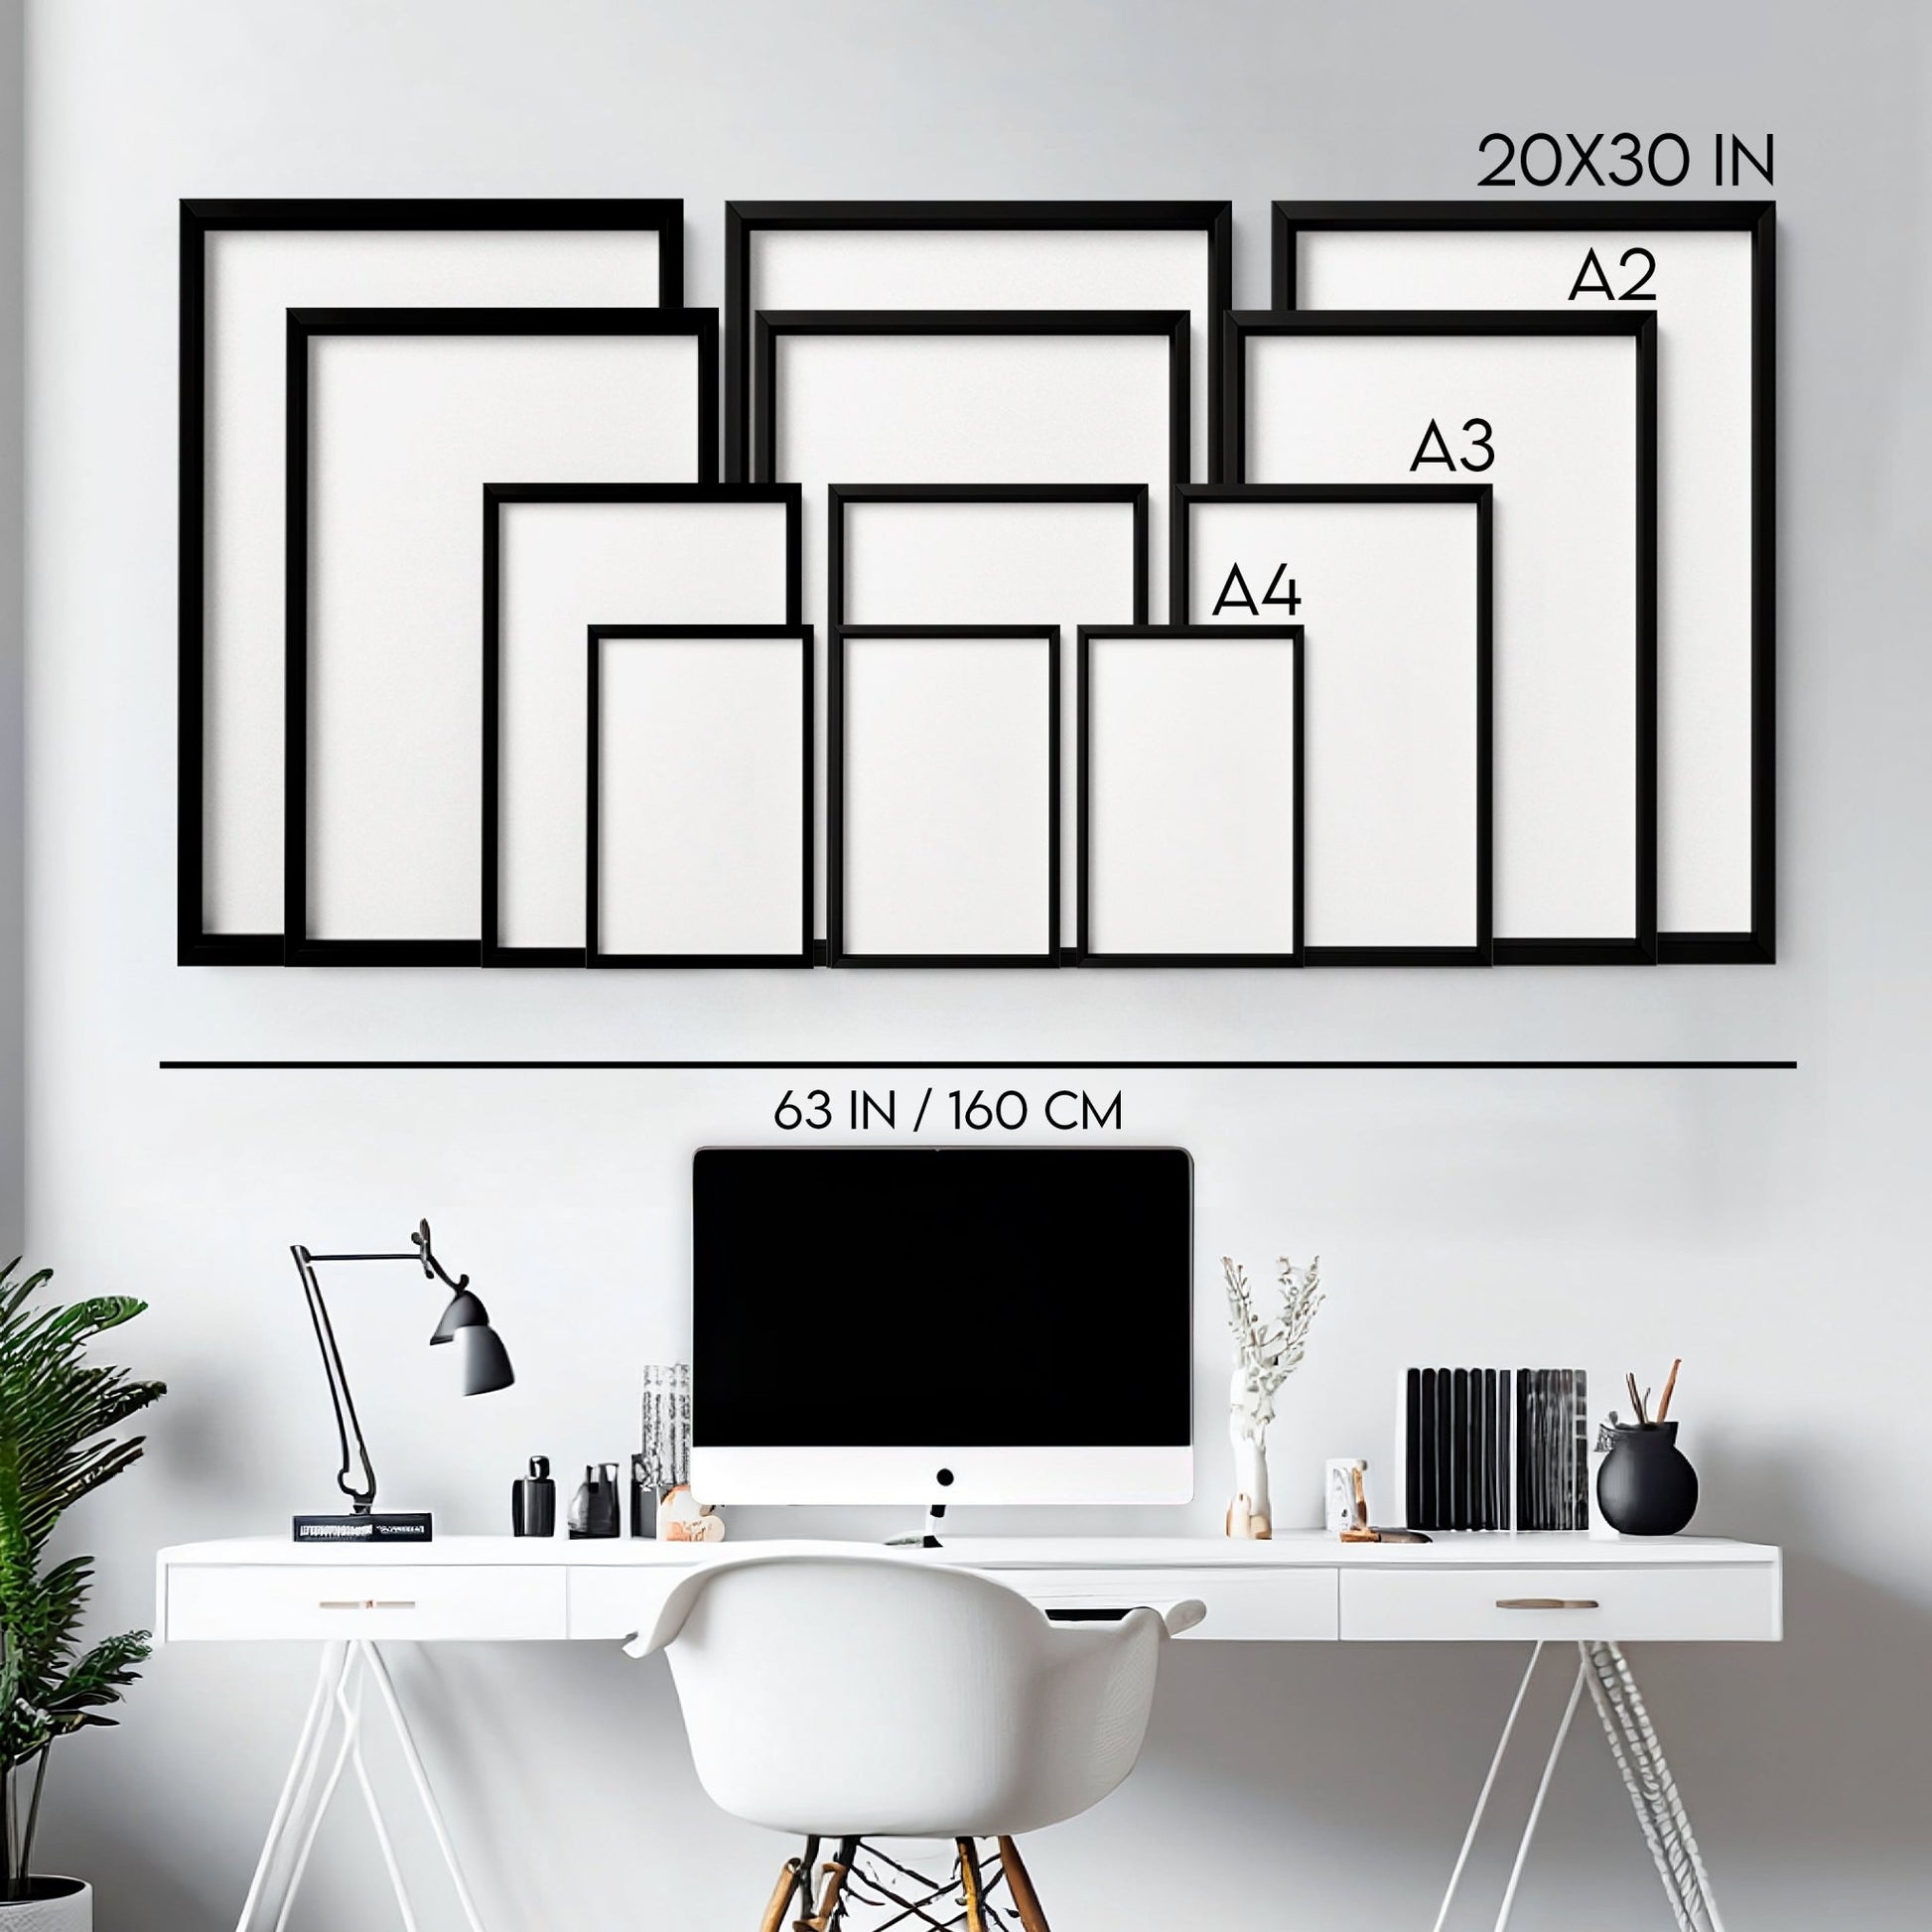 Office desk decor | set of 3 wall art prints - About Wall Art